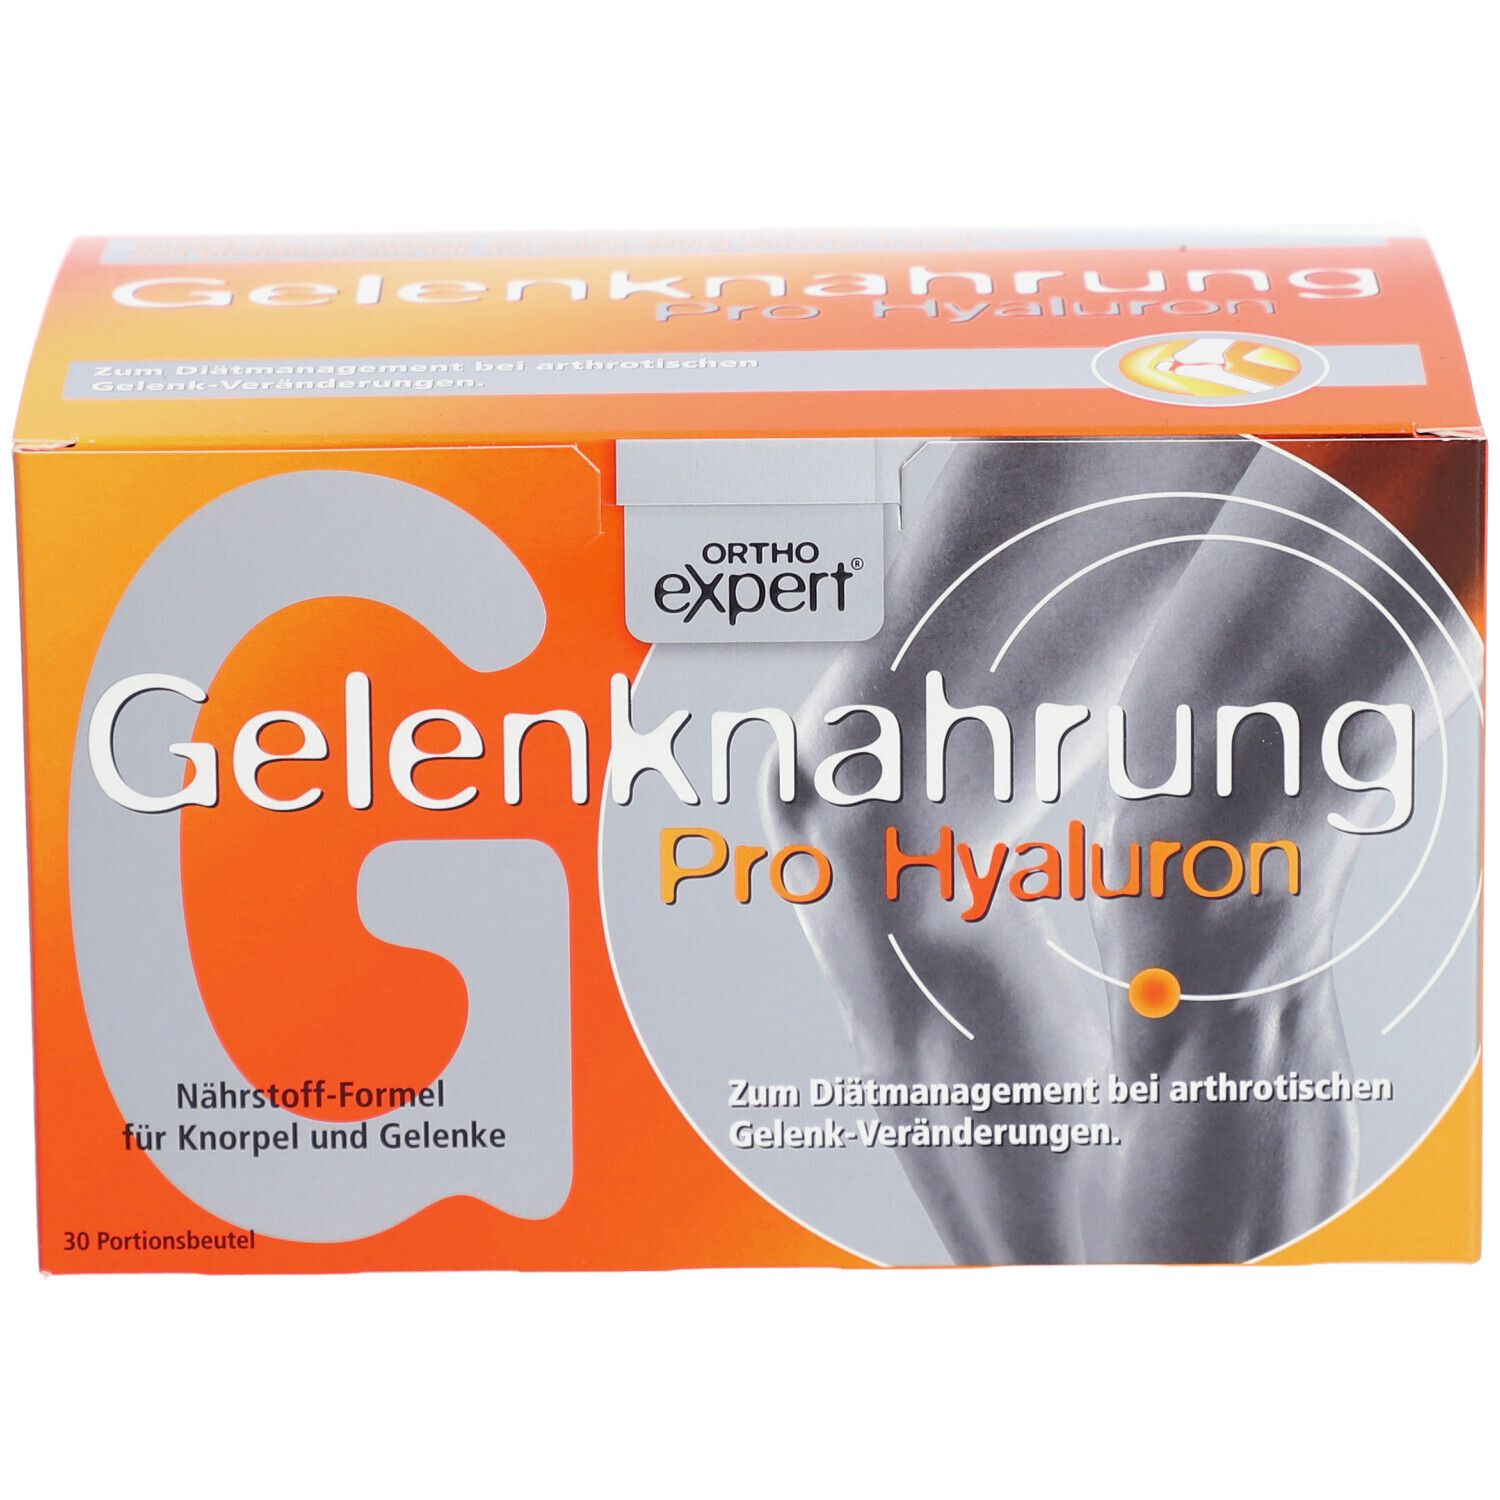 Orthoexpert® Gelenknahrung Pro Hyaluron